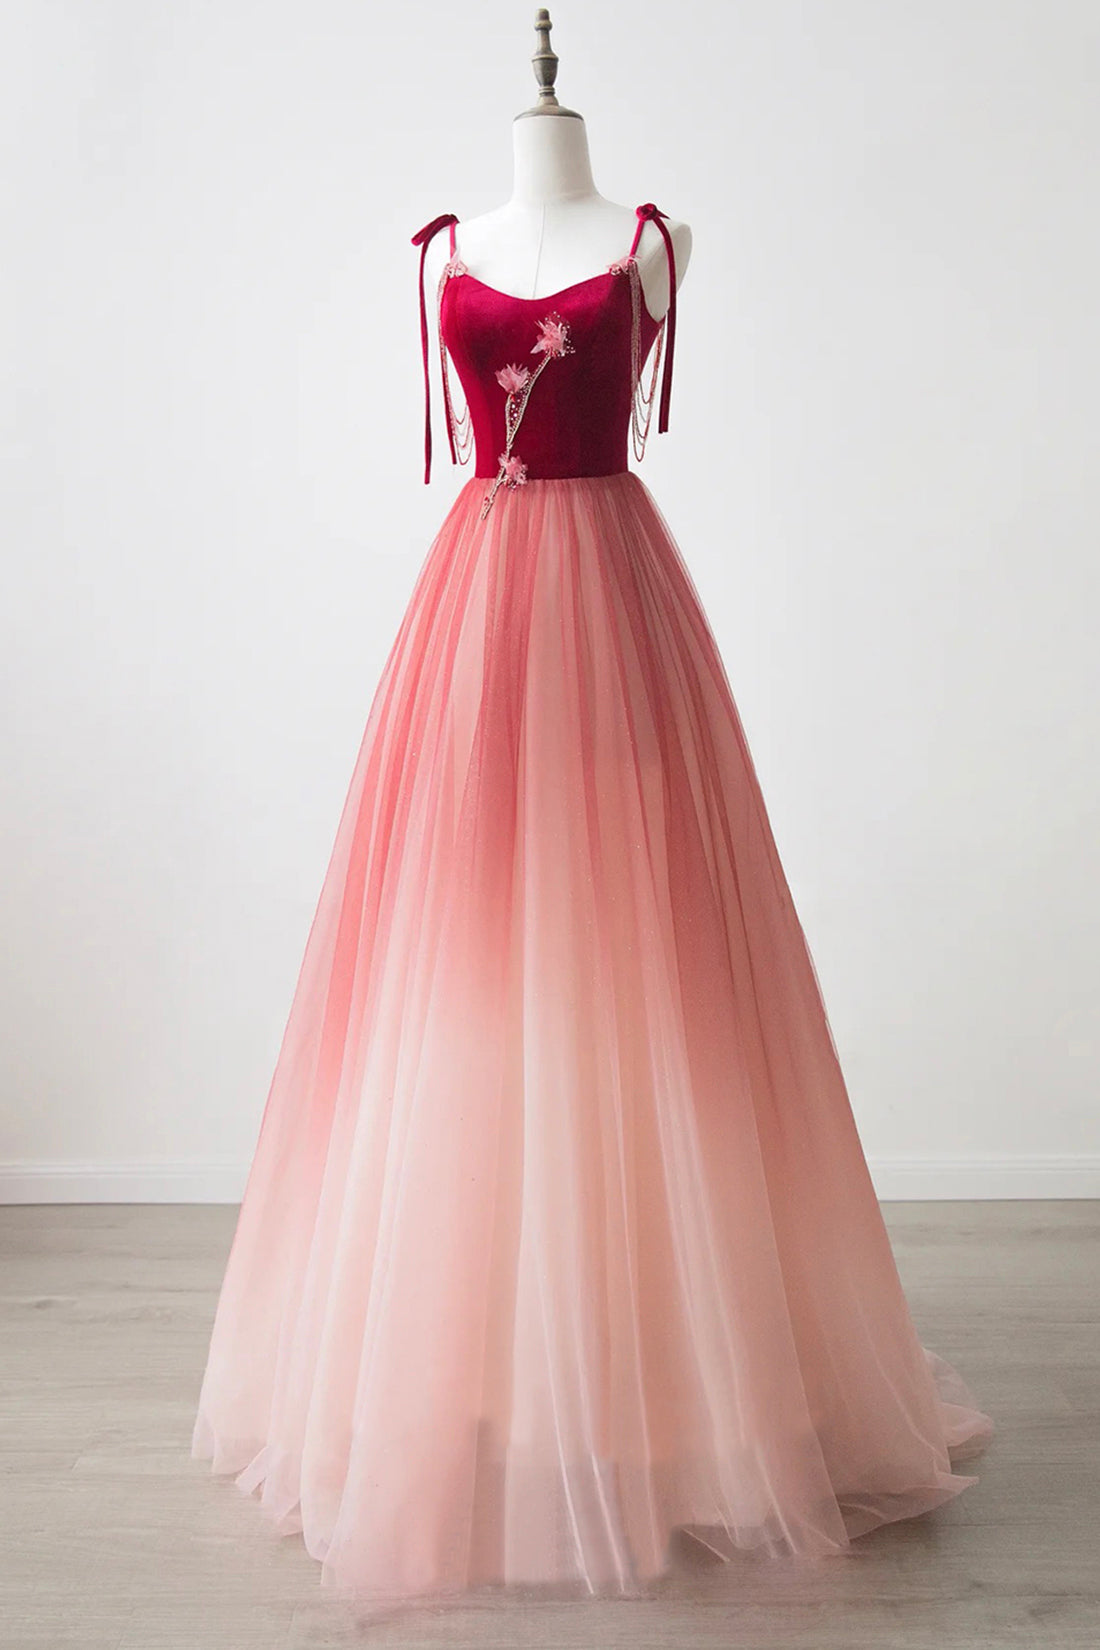 Burgundy Velvet Tulle Long Formal Dress, Beautiful A-Line Spaghetti Strap Evening Dress